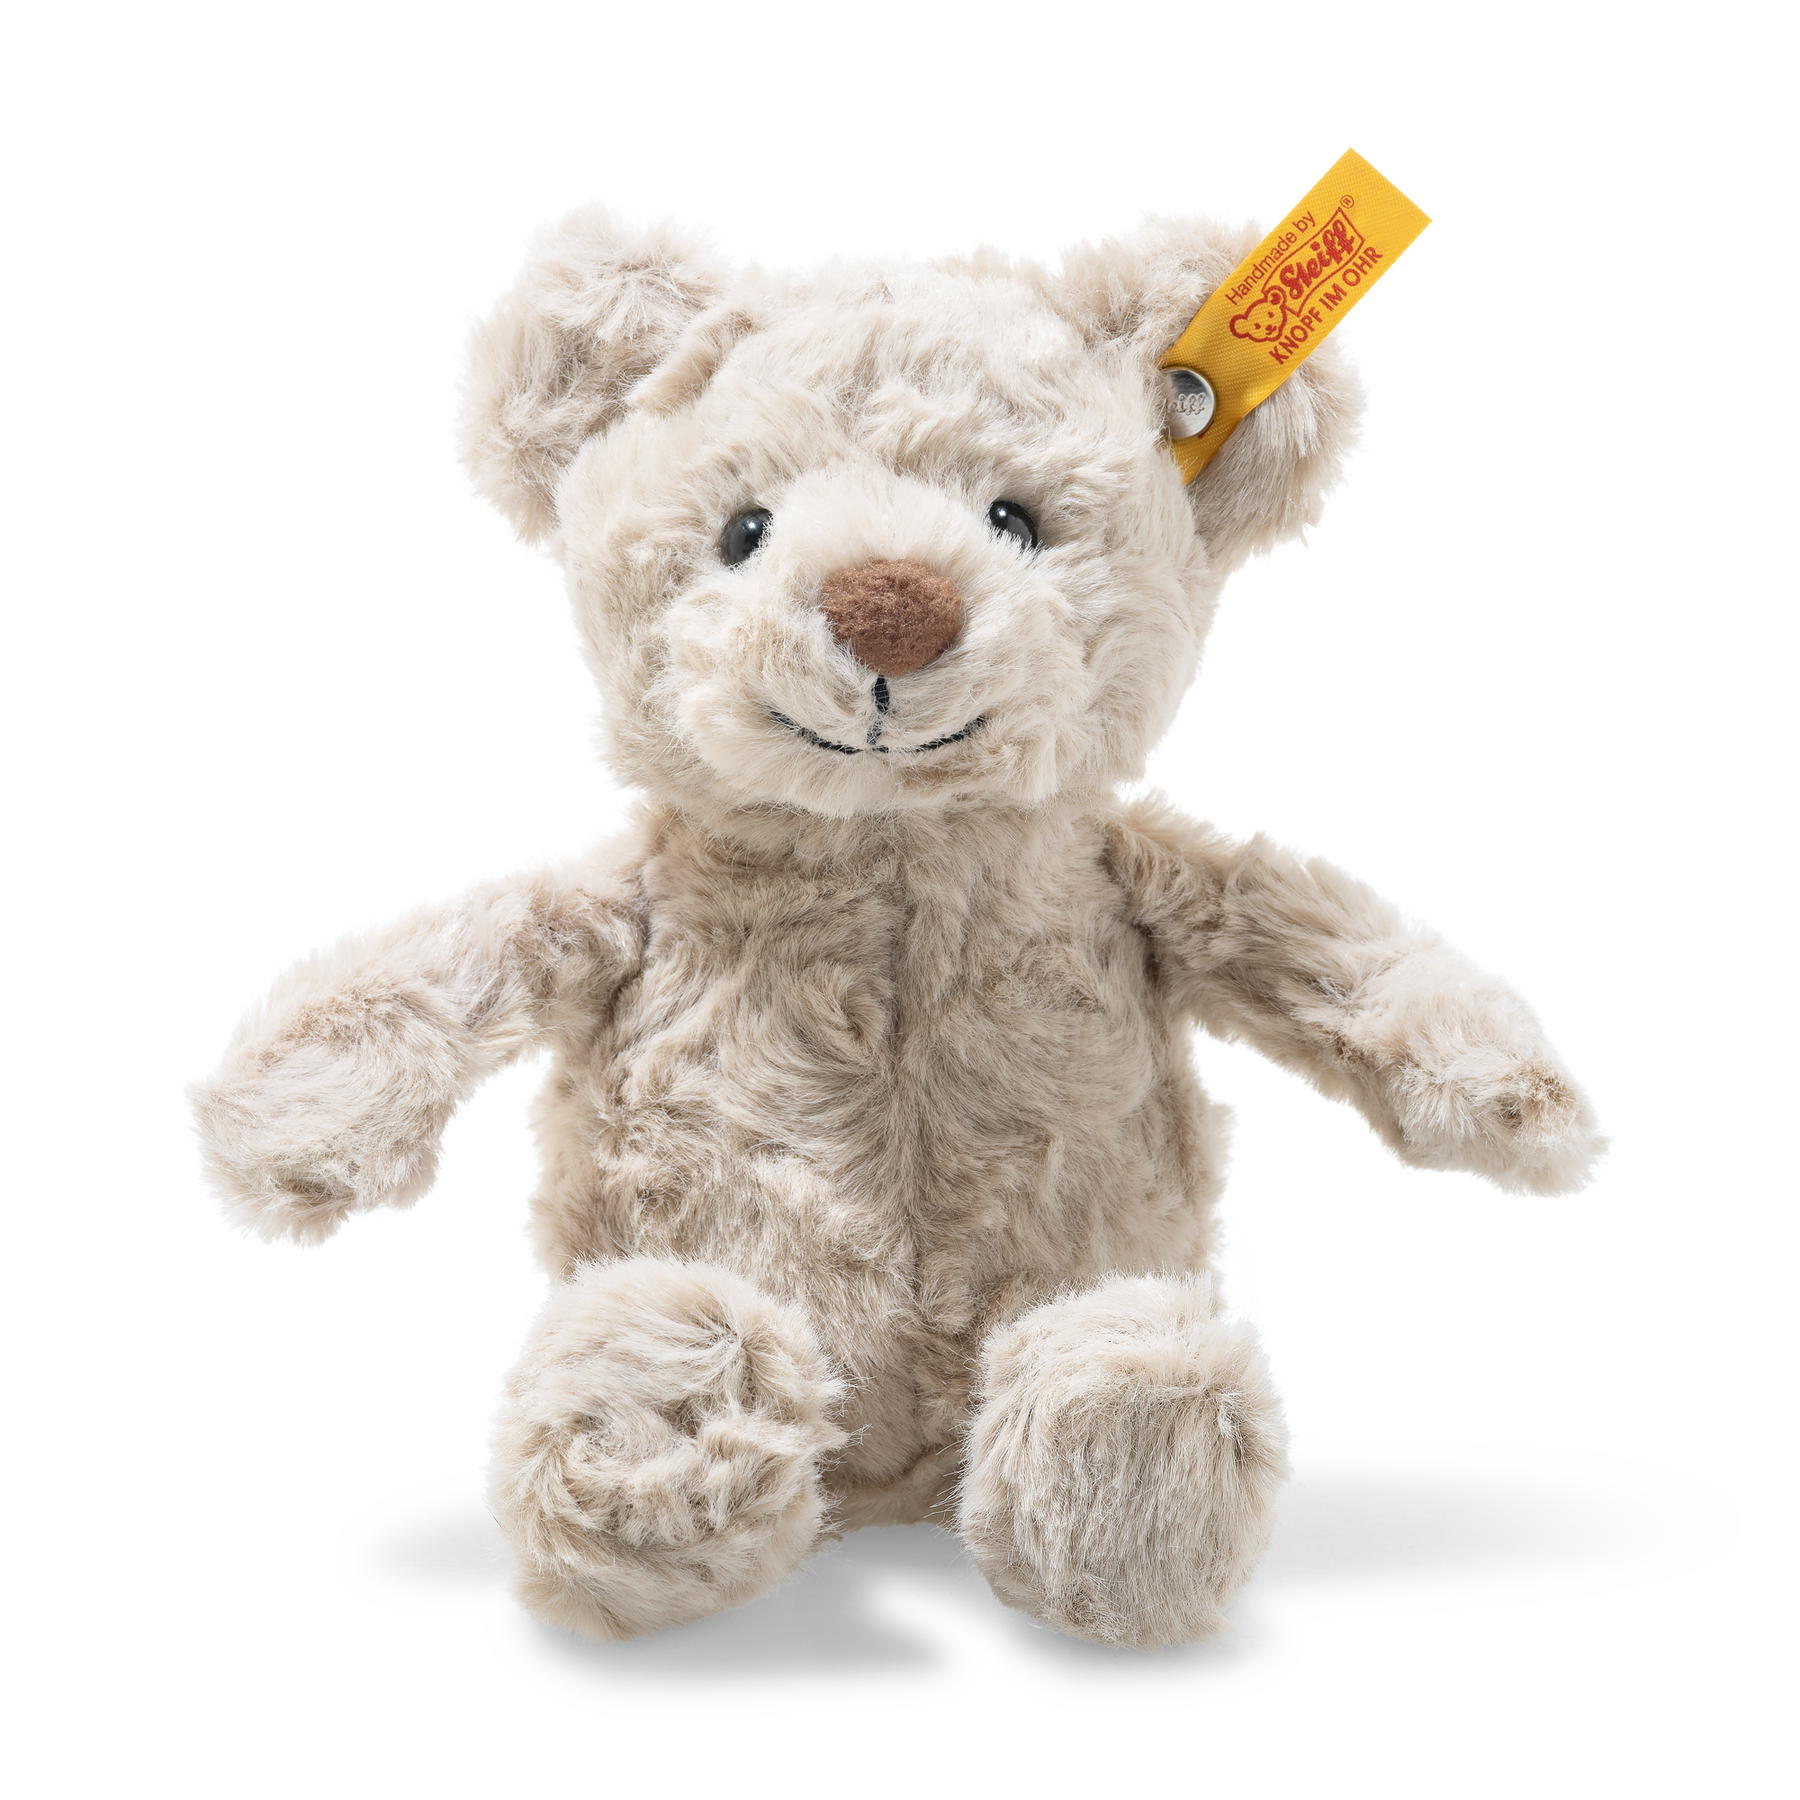 Soft Cuddly Friends Honey Teddy bear with Sticker App